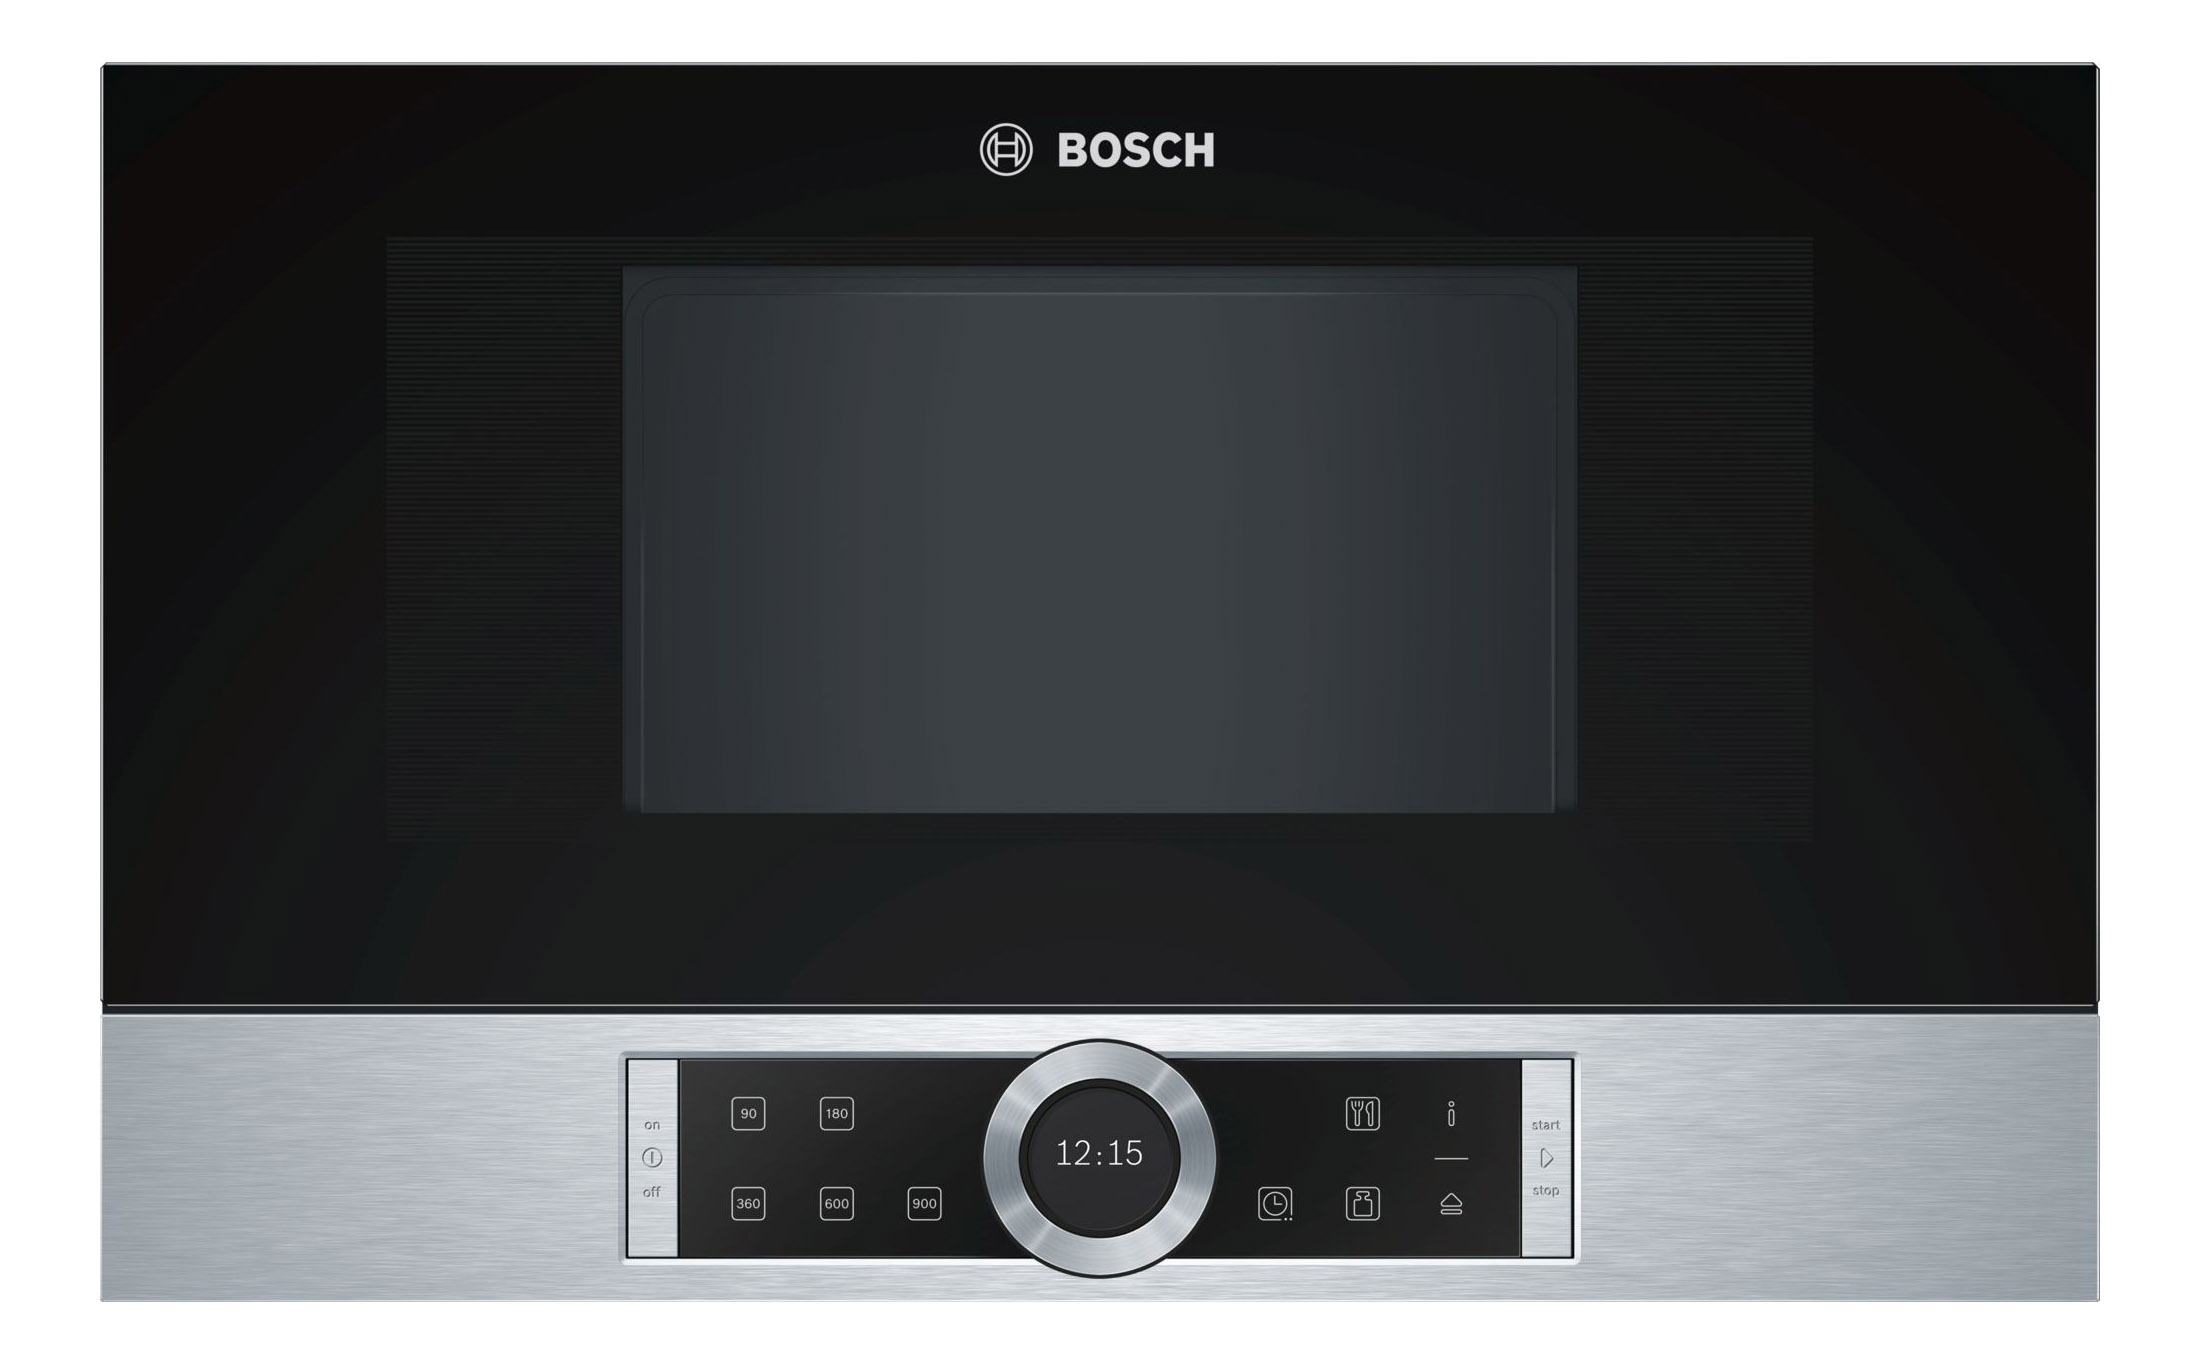 Встраиваемая микроволновая печь Bosch BFL634GS1 Black/Silver встраиваемая микроволновая печь bosch bfl 520mw0 white